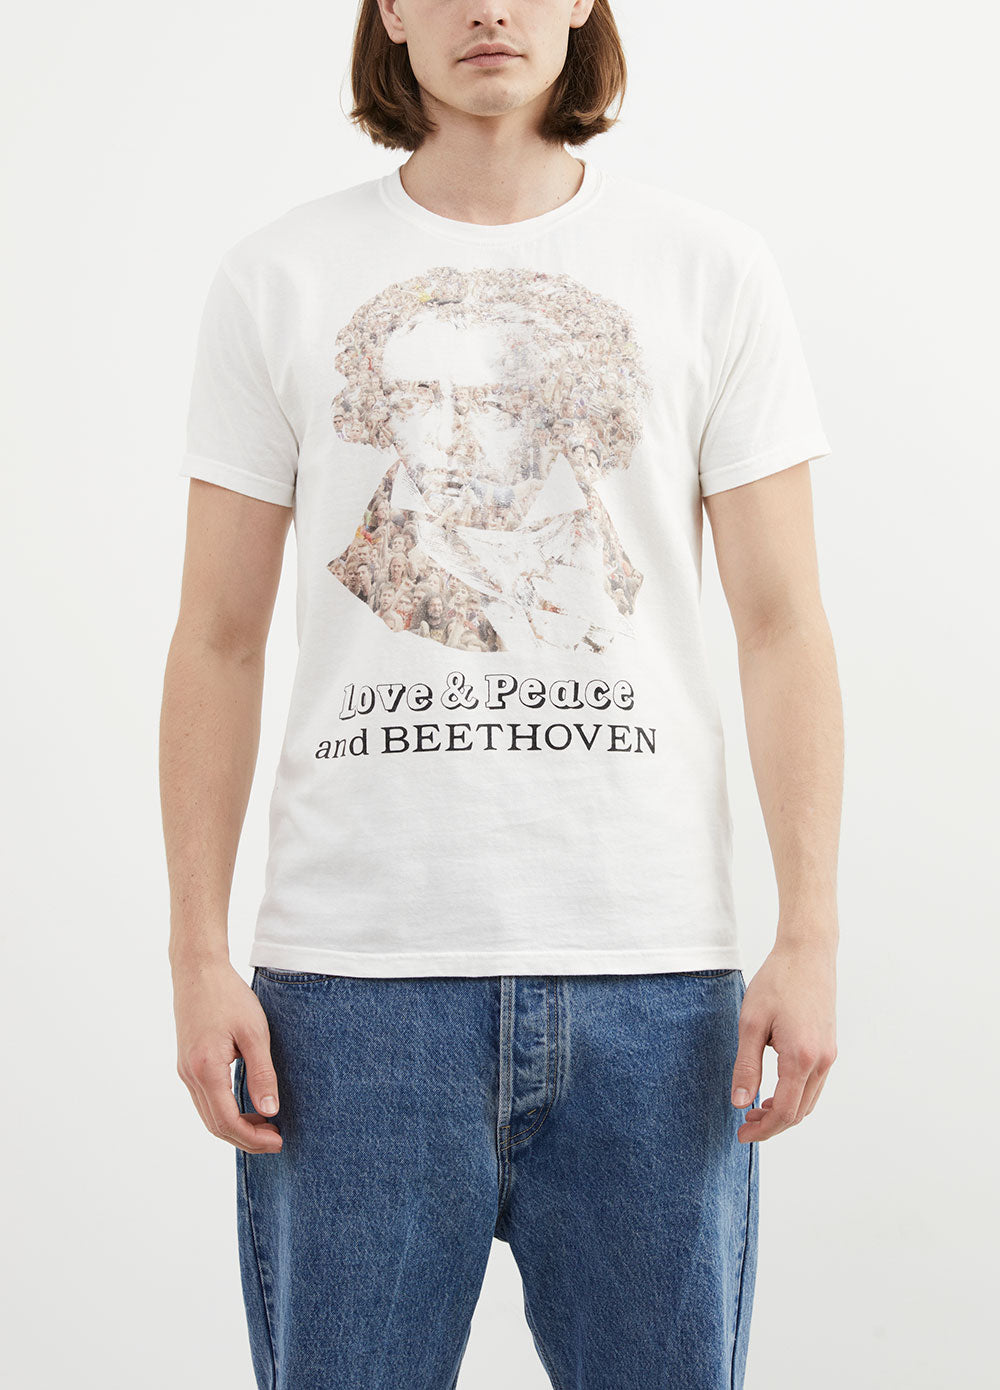 Beethoven T-shirt